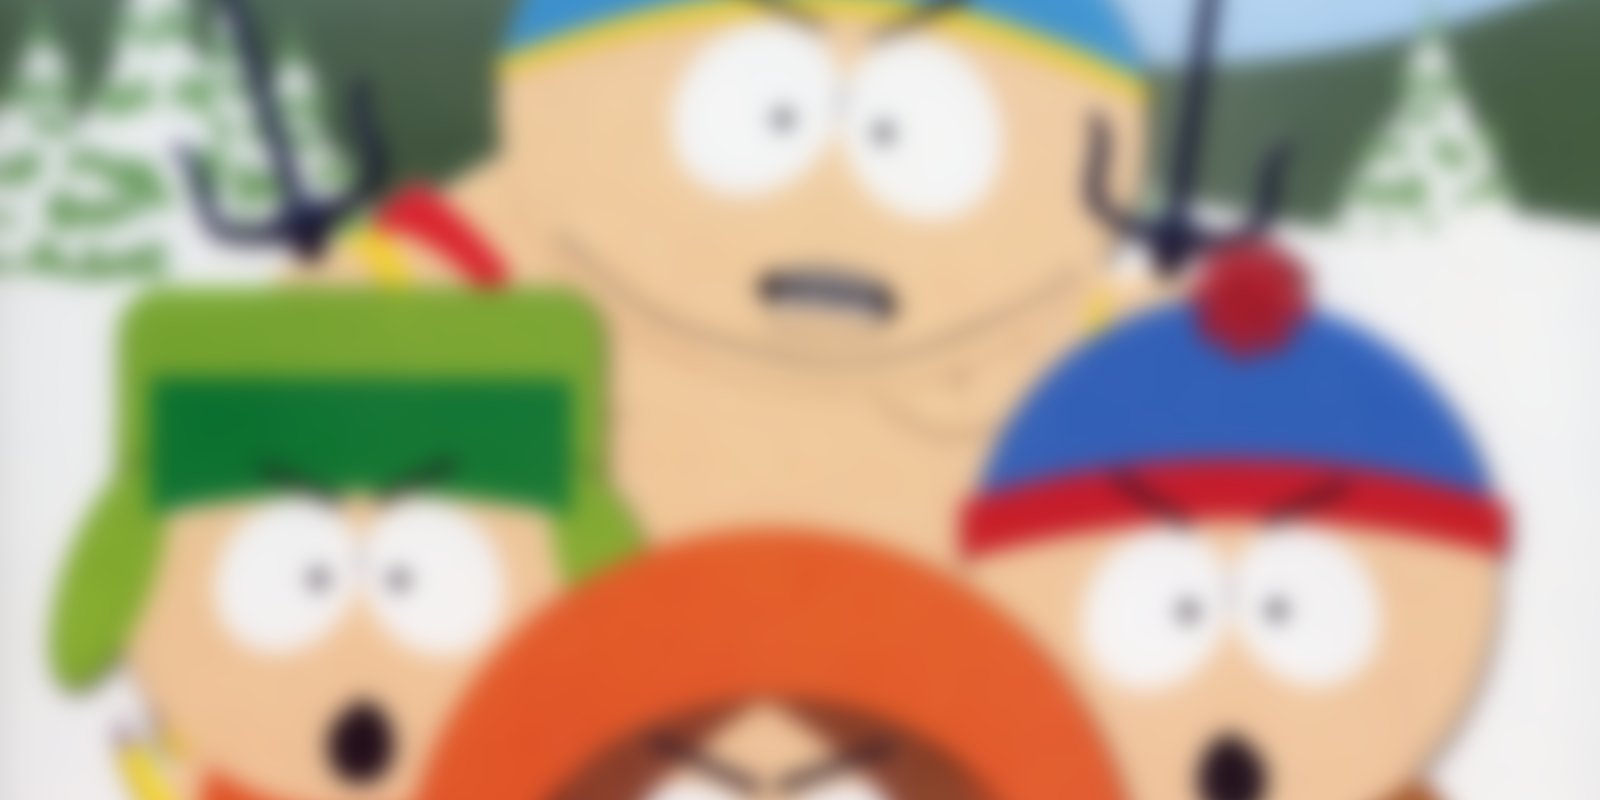 South Park - Staffel 8